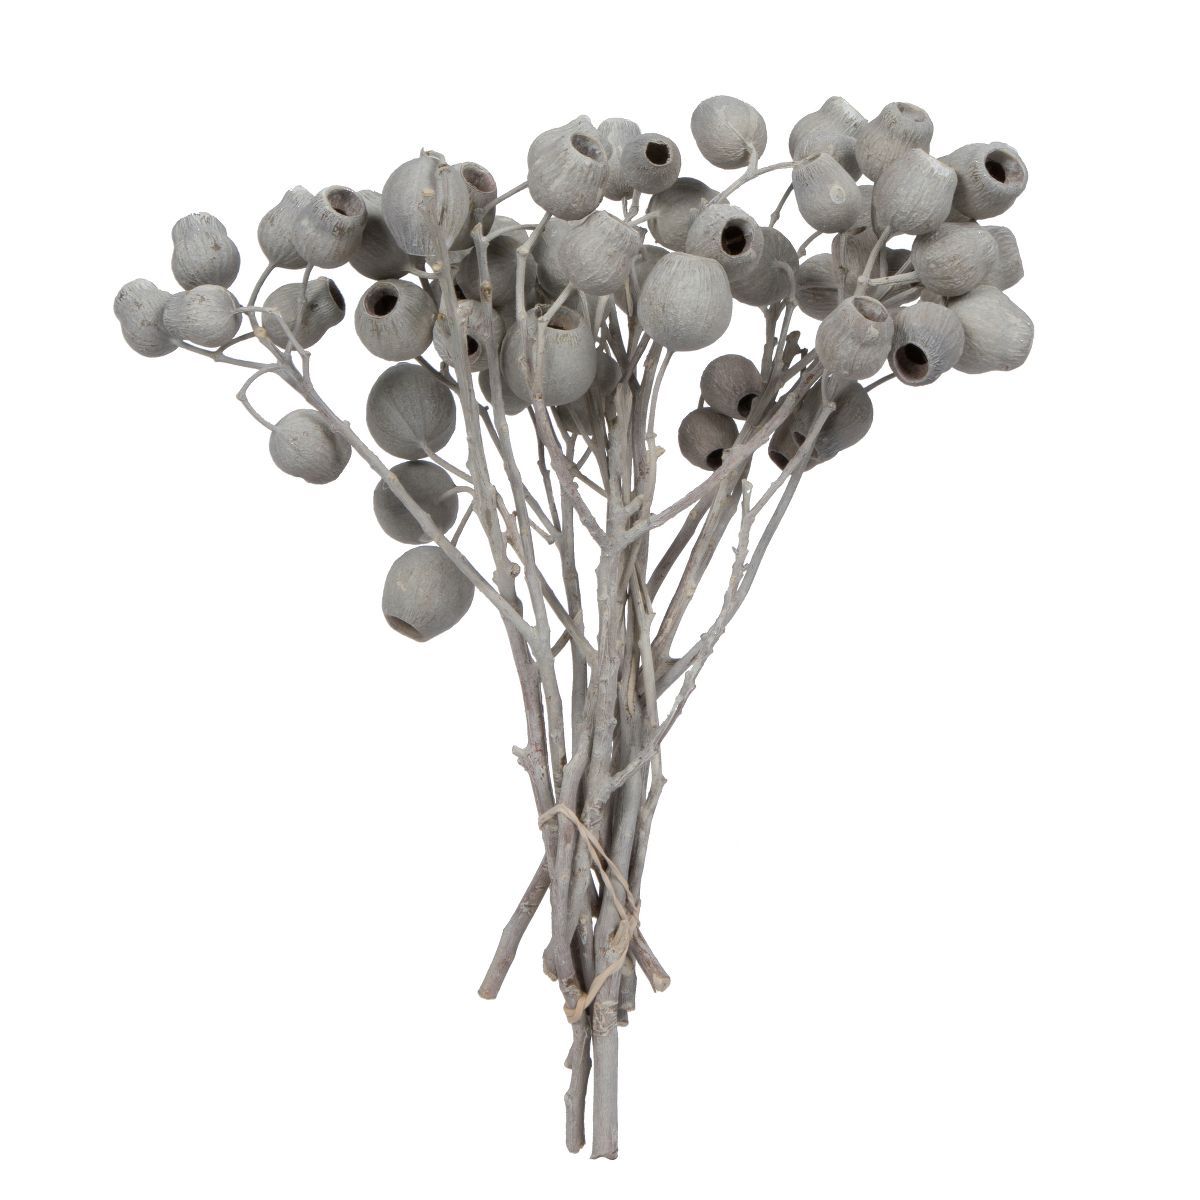 Vickerman Natural Botanicals 11" x 4" Bellgum Branch, 5-7 Bells, Ivory Frosted, 10 stems per unit | Target